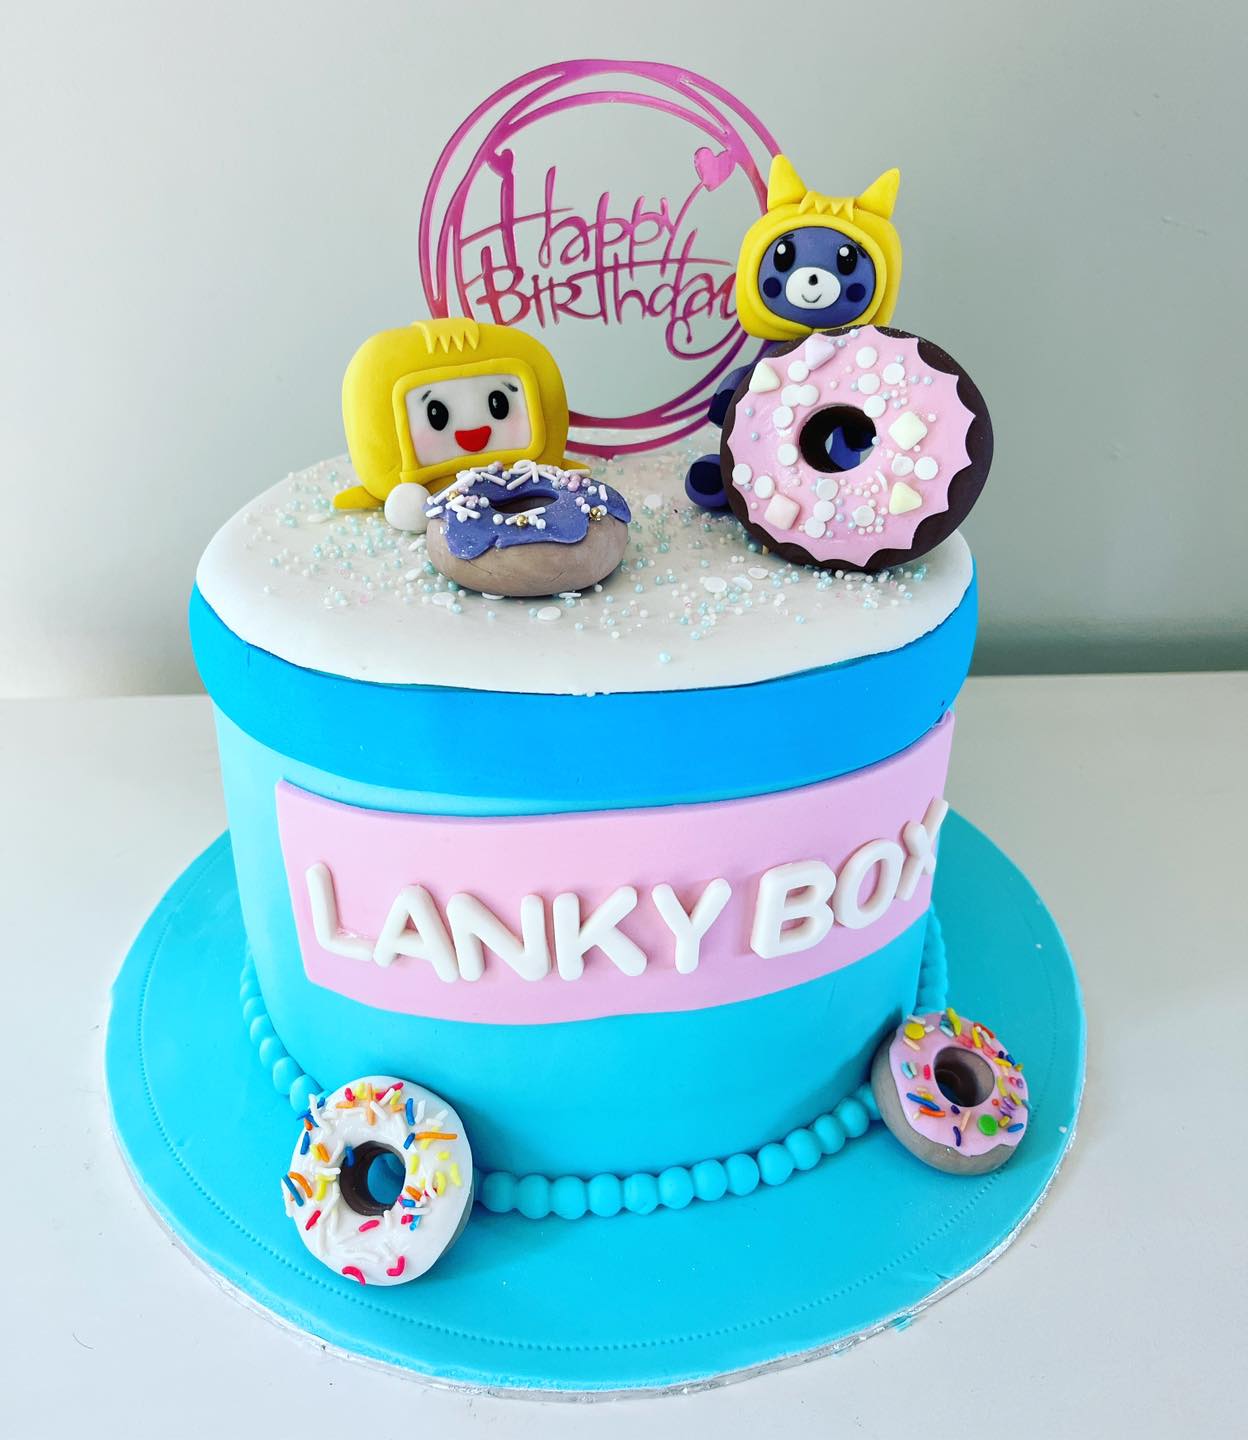 Lanky box, cape town cakes, novelty cakes, birthday cakes, southern peninsula cakes, cake decorating